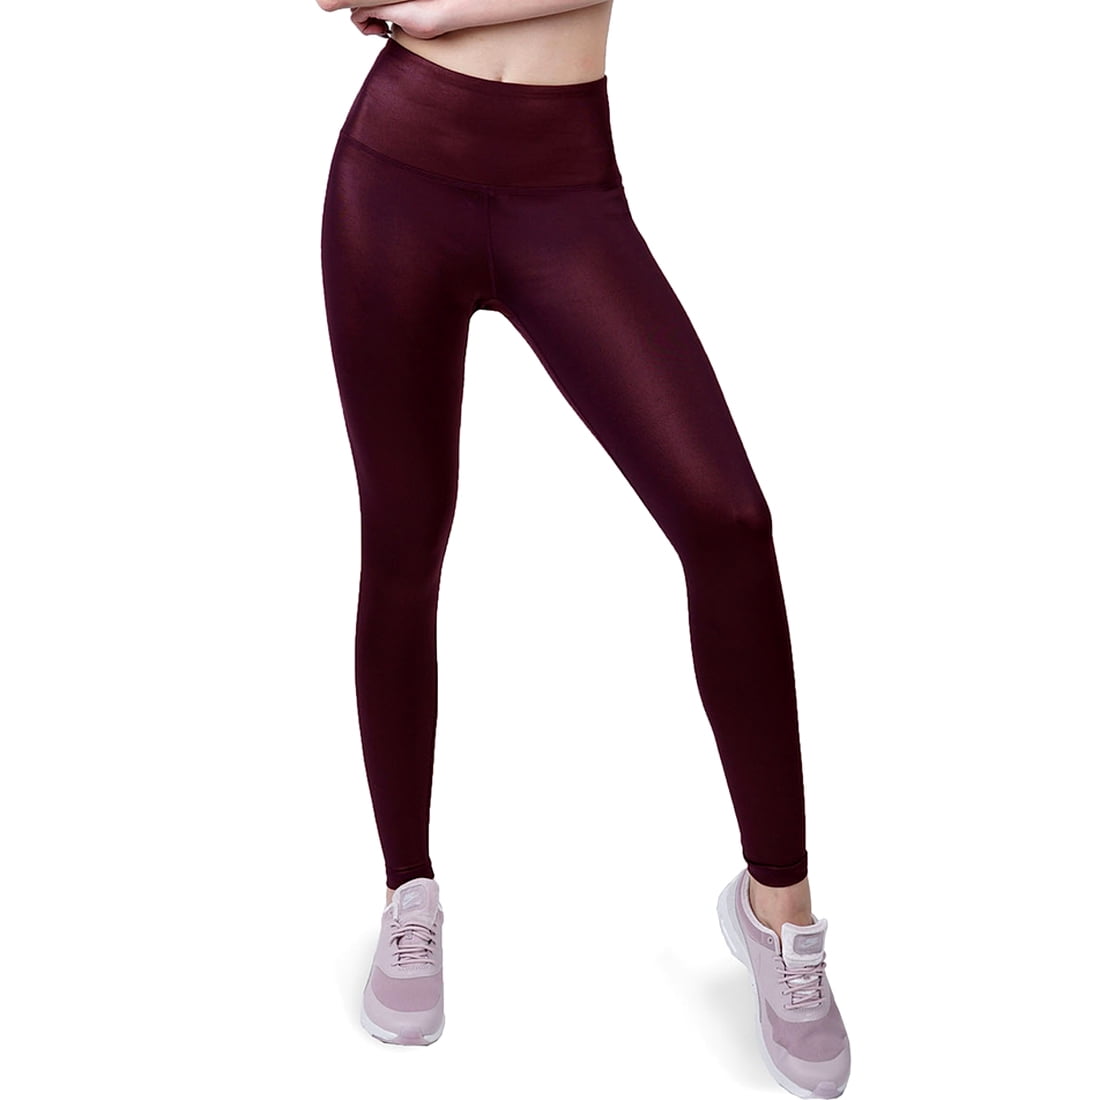 Cover Girl Burgundy Wine Shiny Leather Look Yoga Workout Leggings, Medium 